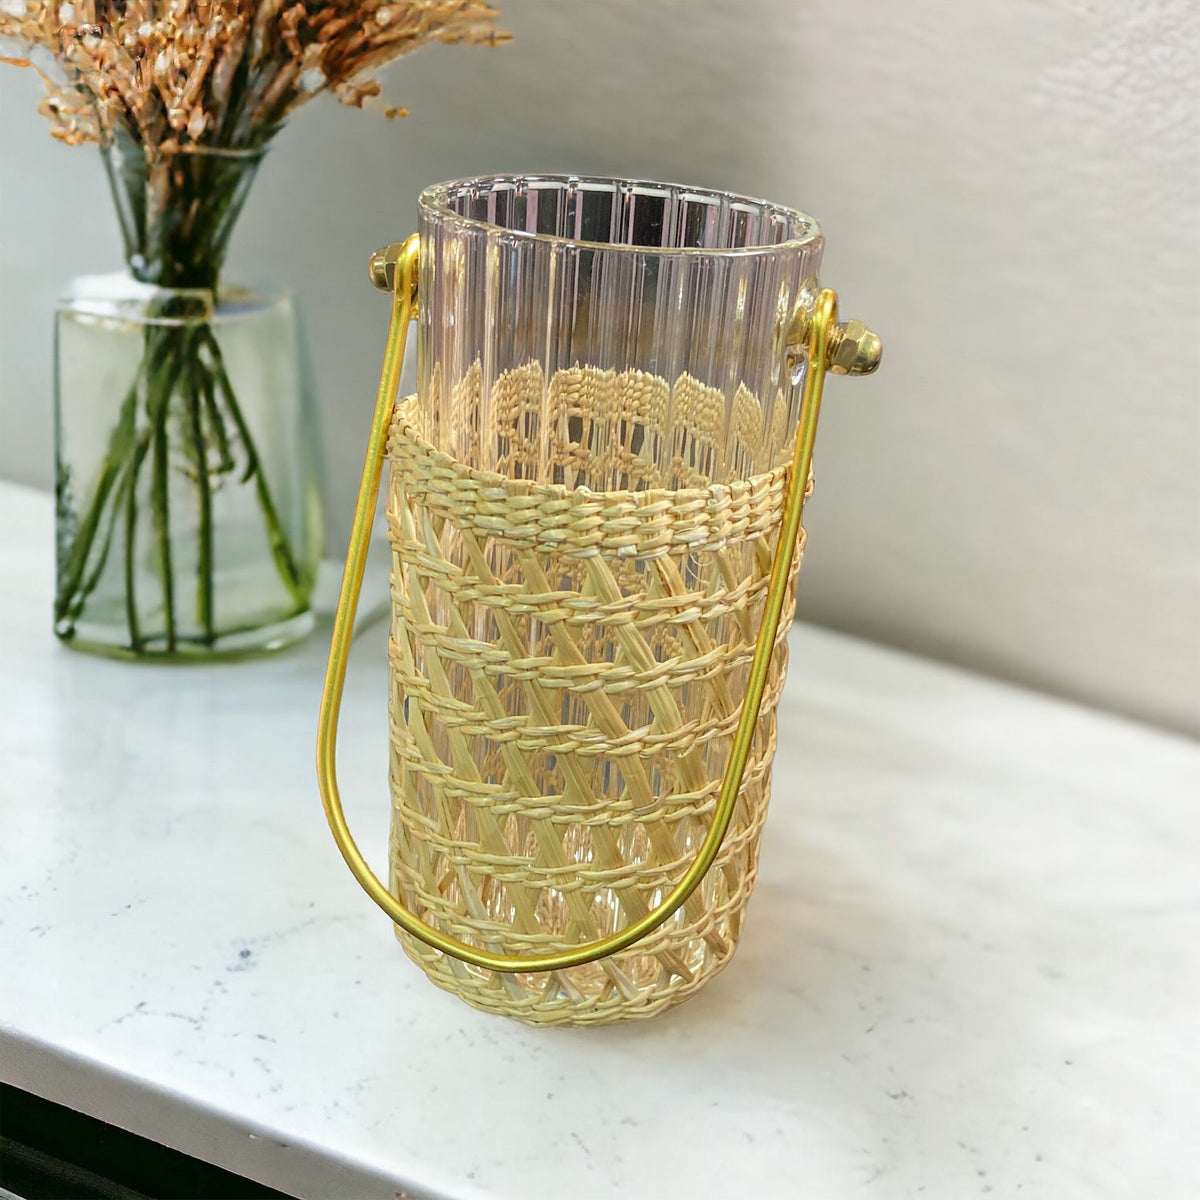 Jute-Wrapped Lined Lantern Jar | Home Décor